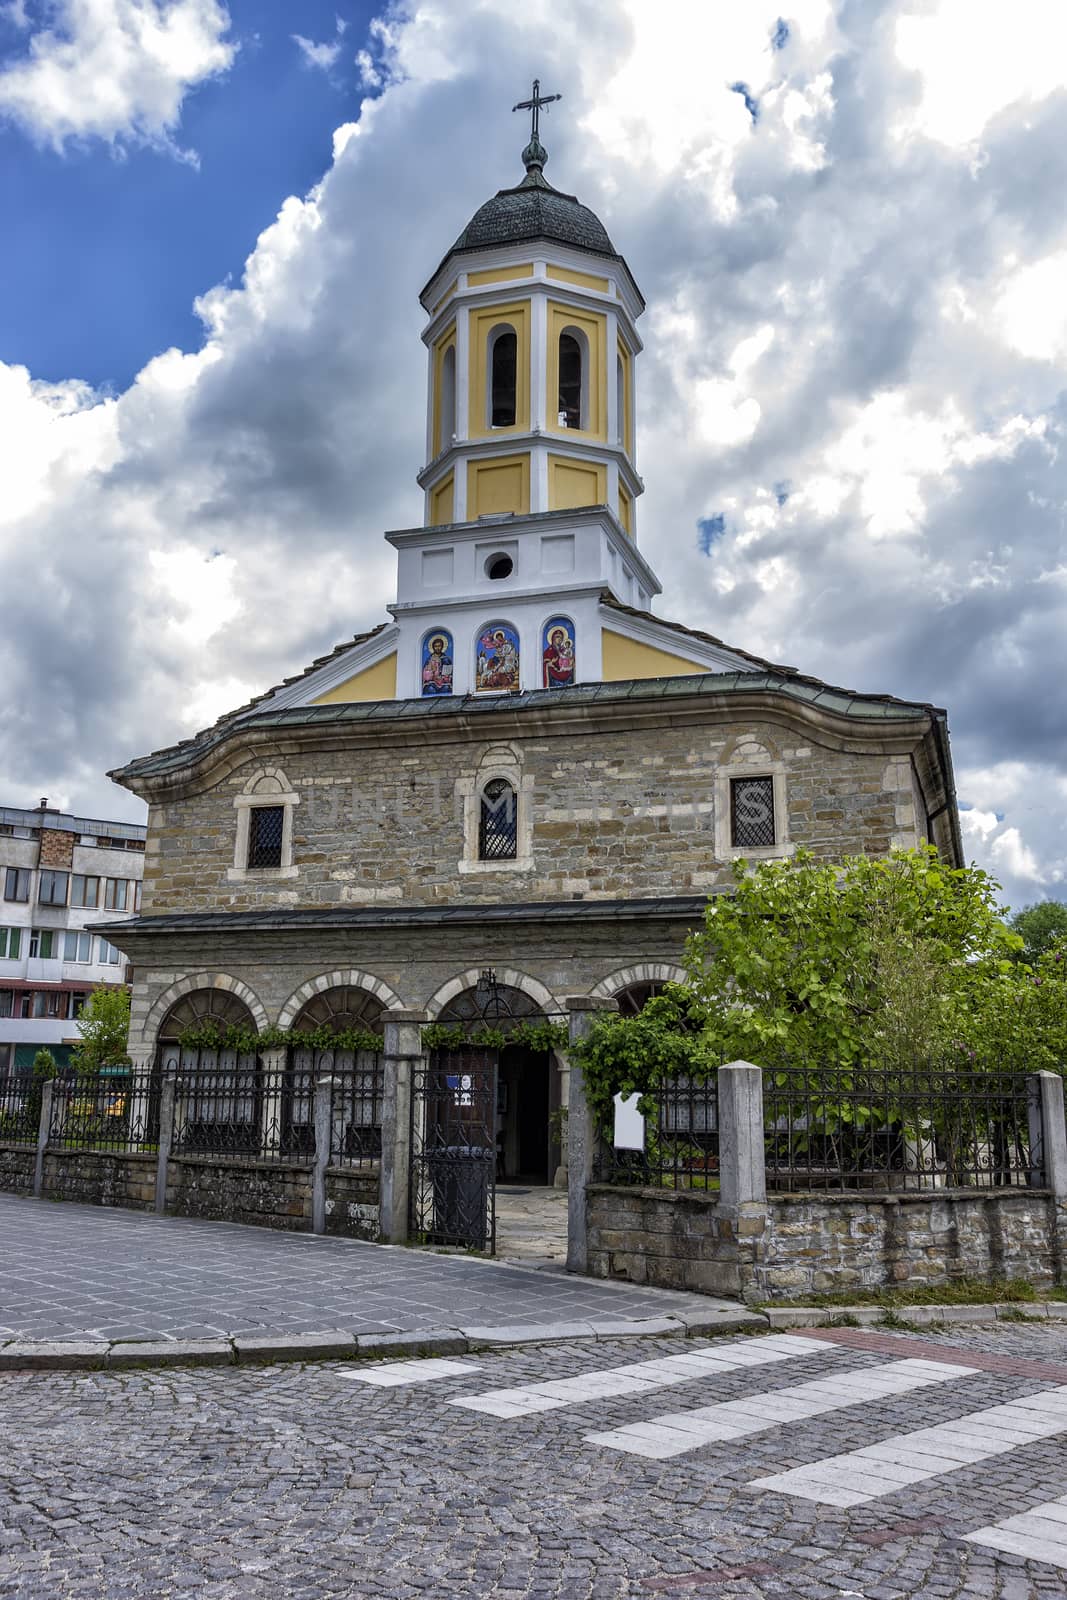 St. George church in Tryavna city, Bulgaria